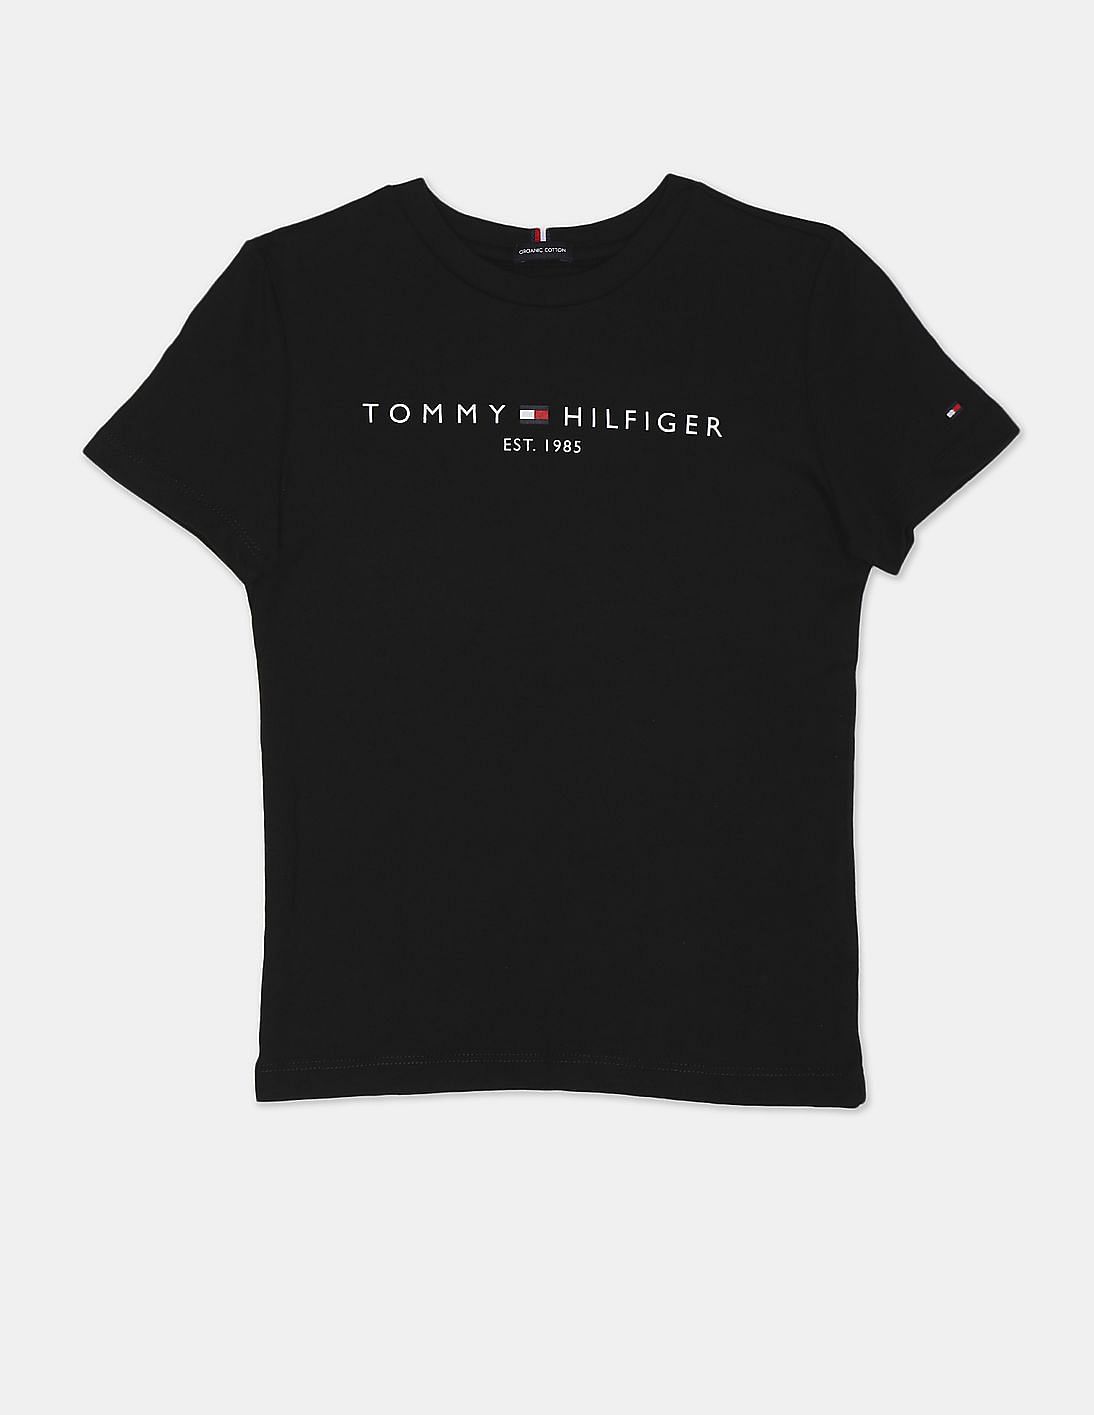 Buy Tommy Hilfiger Kids Boys Black Brand Print Cotton T-Shirt - NNNOW.com